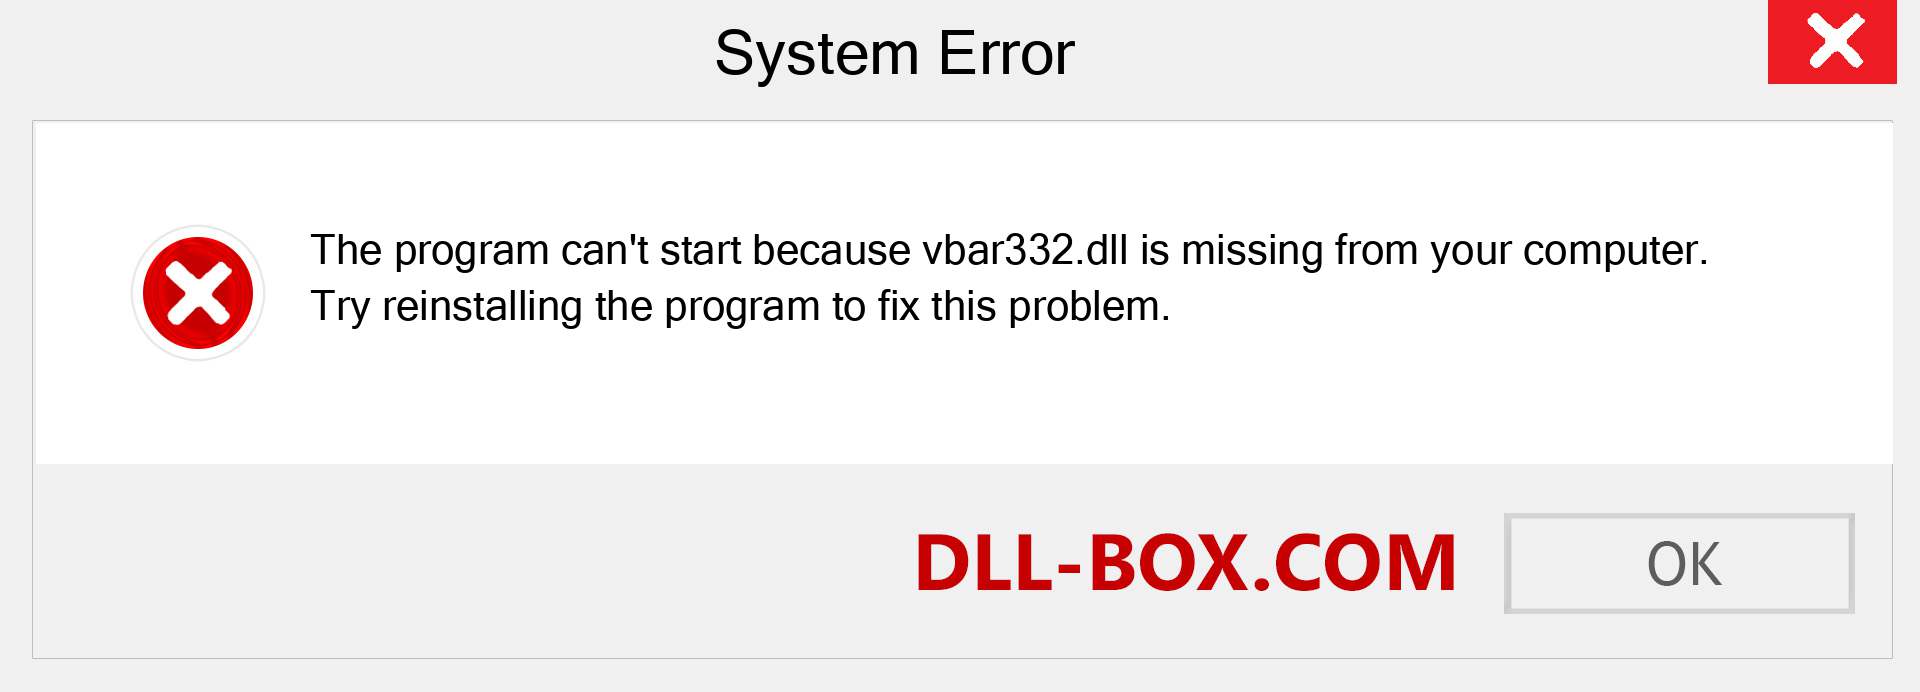  vbar332.dll file is missing?. Download for Windows 7, 8, 10 - Fix  vbar332 dll Missing Error on Windows, photos, images